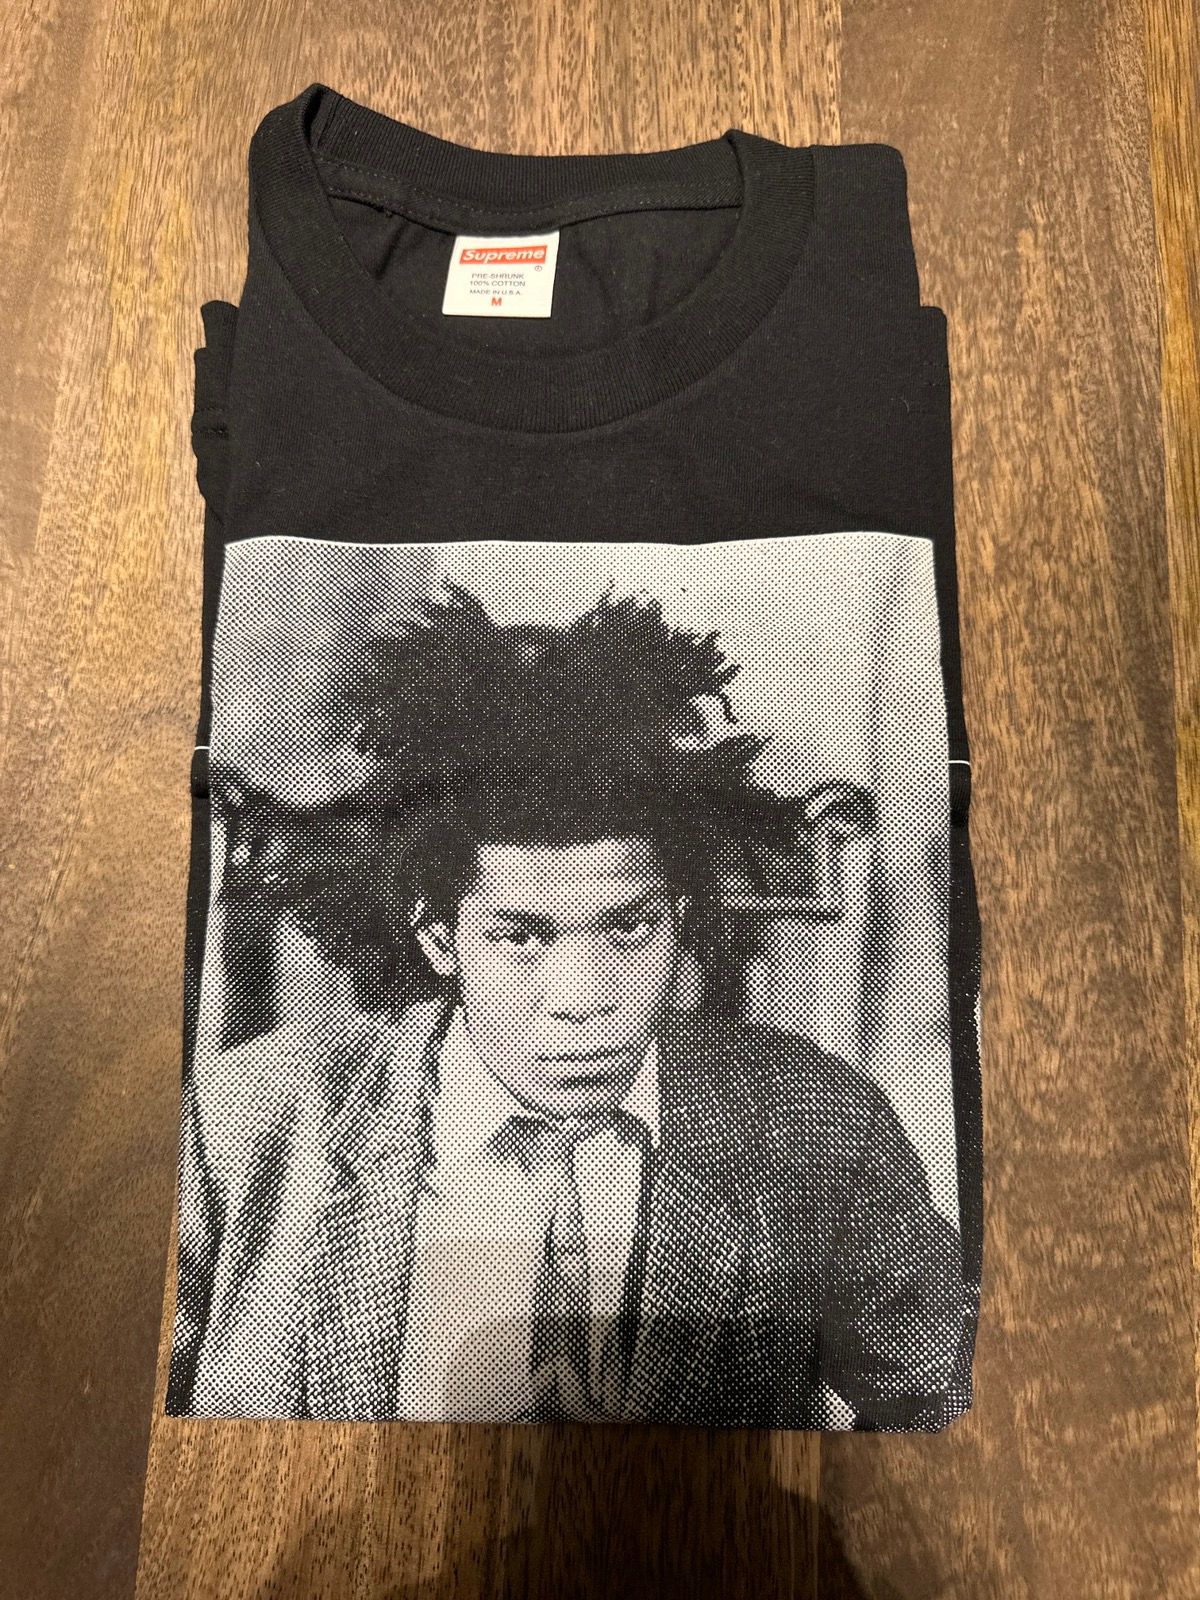 Supreme Supreme X Jean Michel Basquiat Portrait Tee 2013 Black